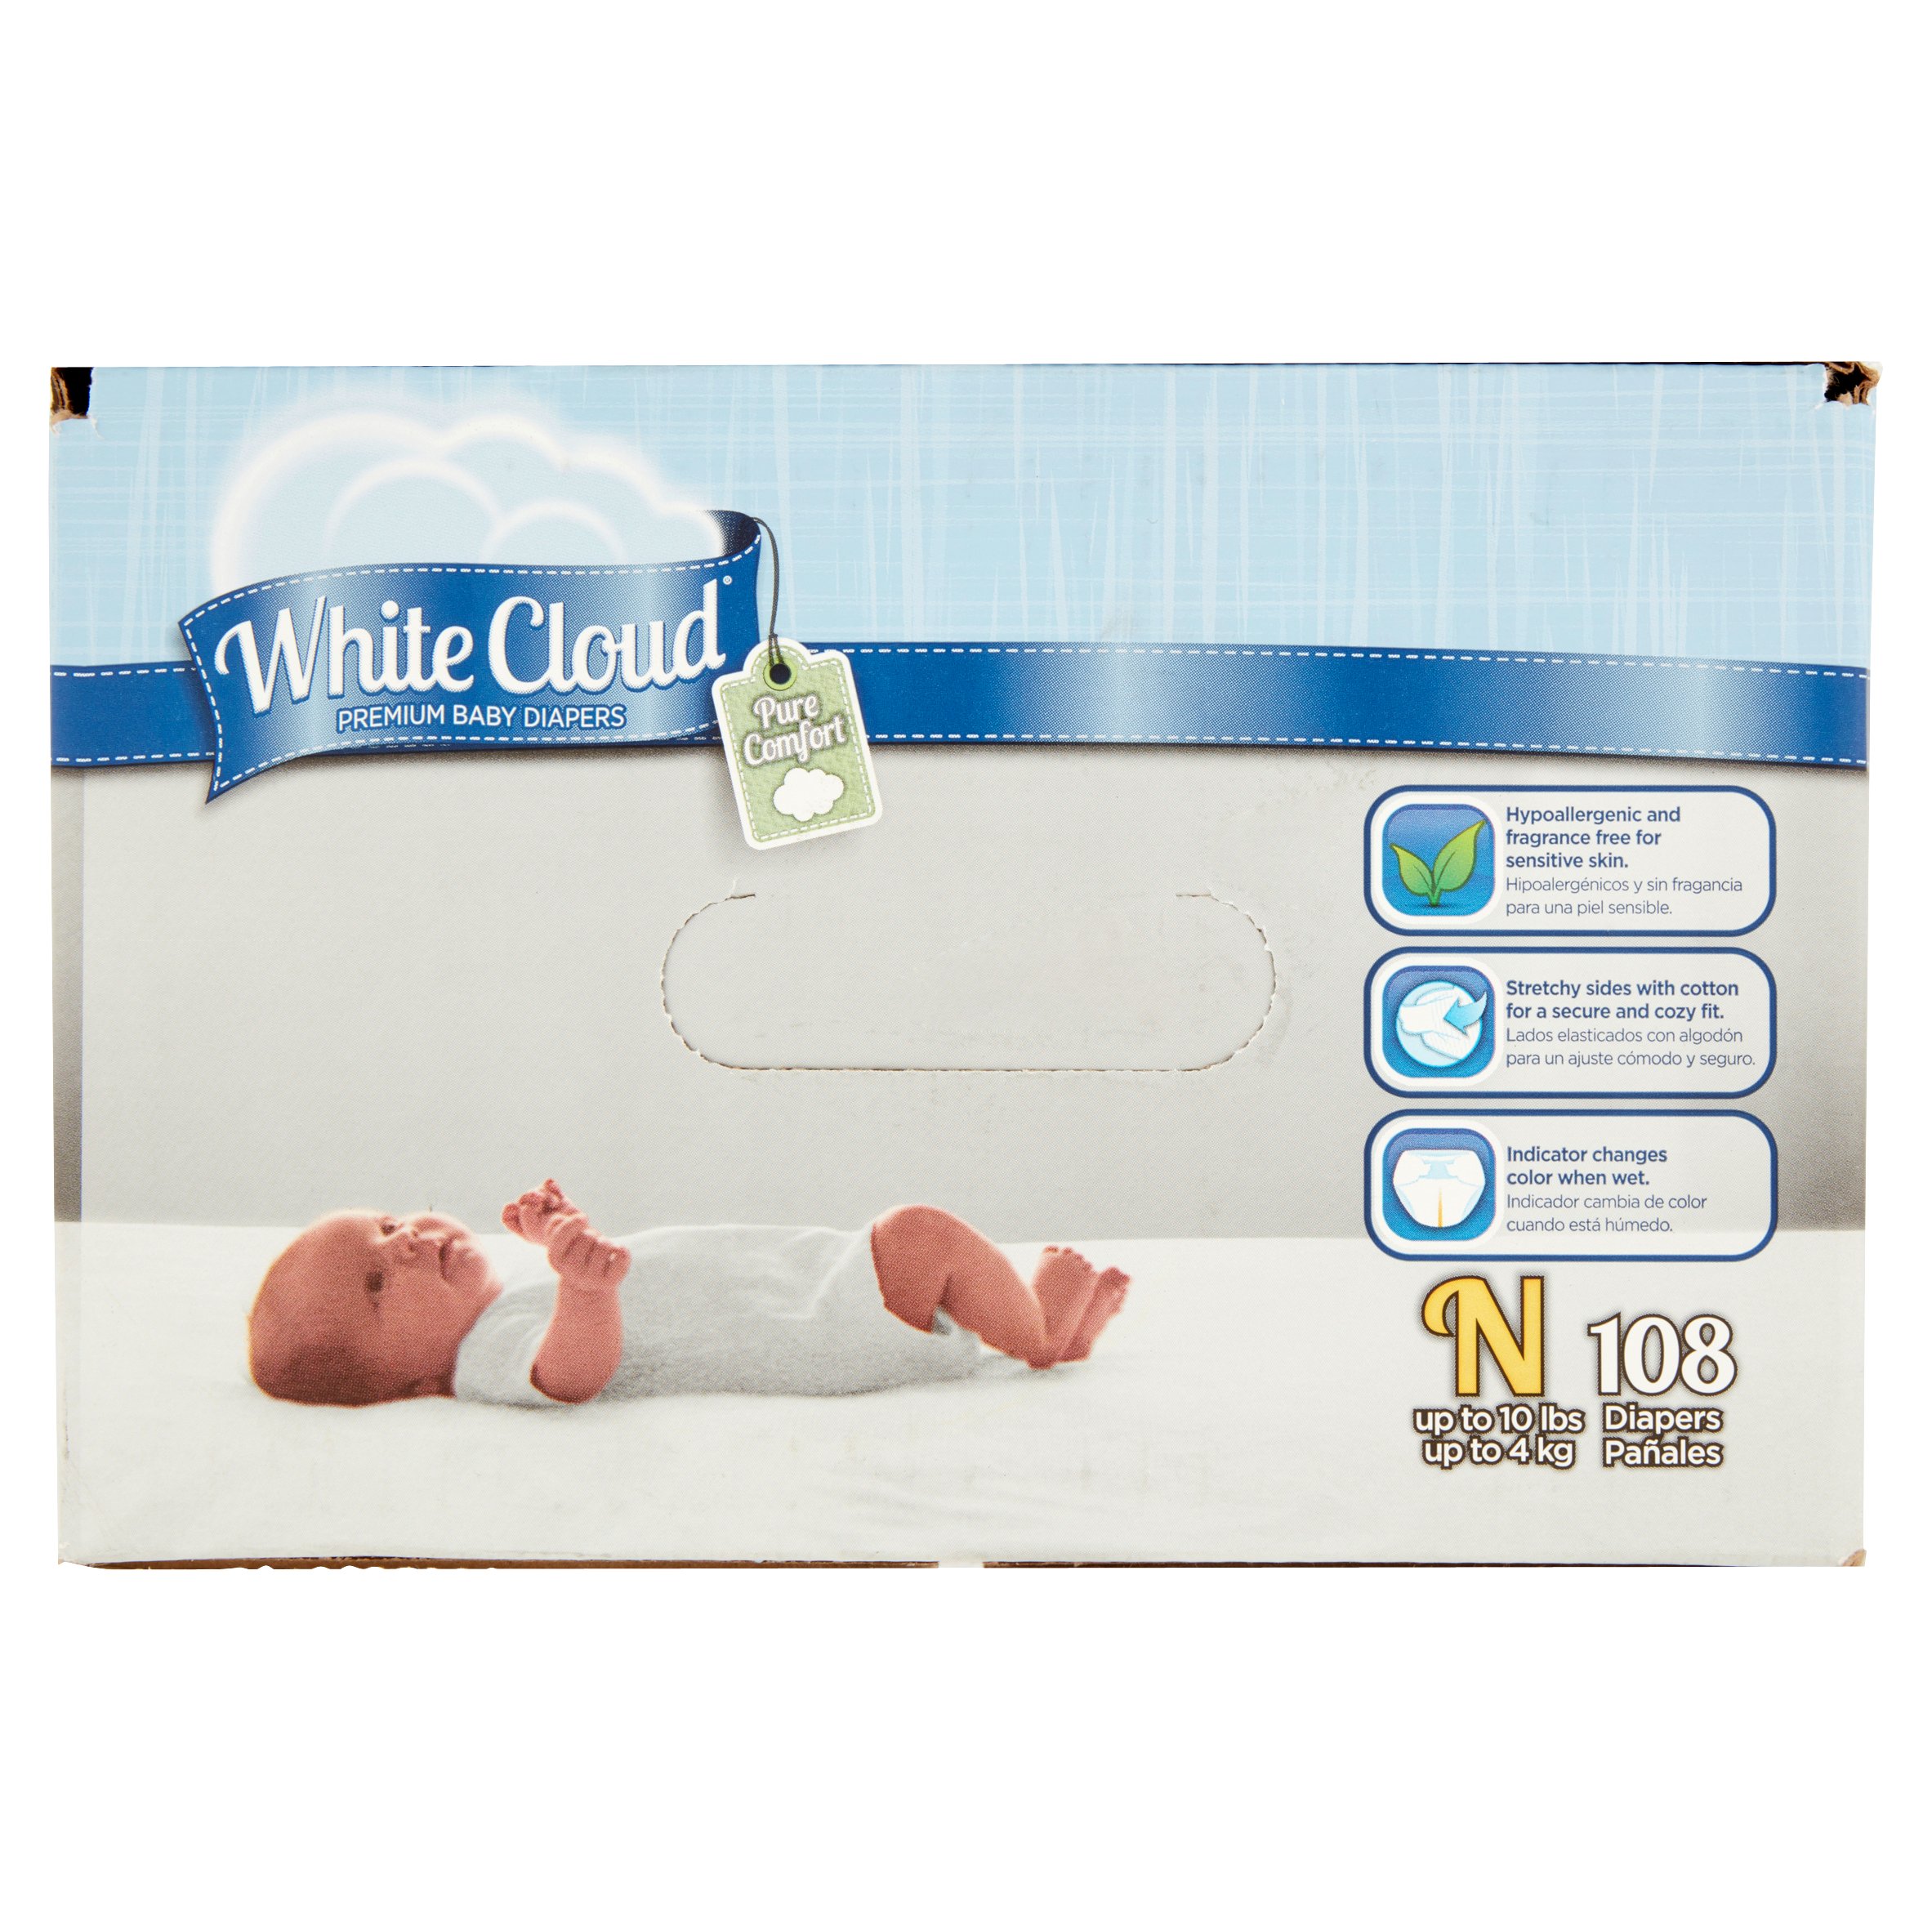 White Cloud Diaper Club Box, Newborn,108 ct - image 3 of 5